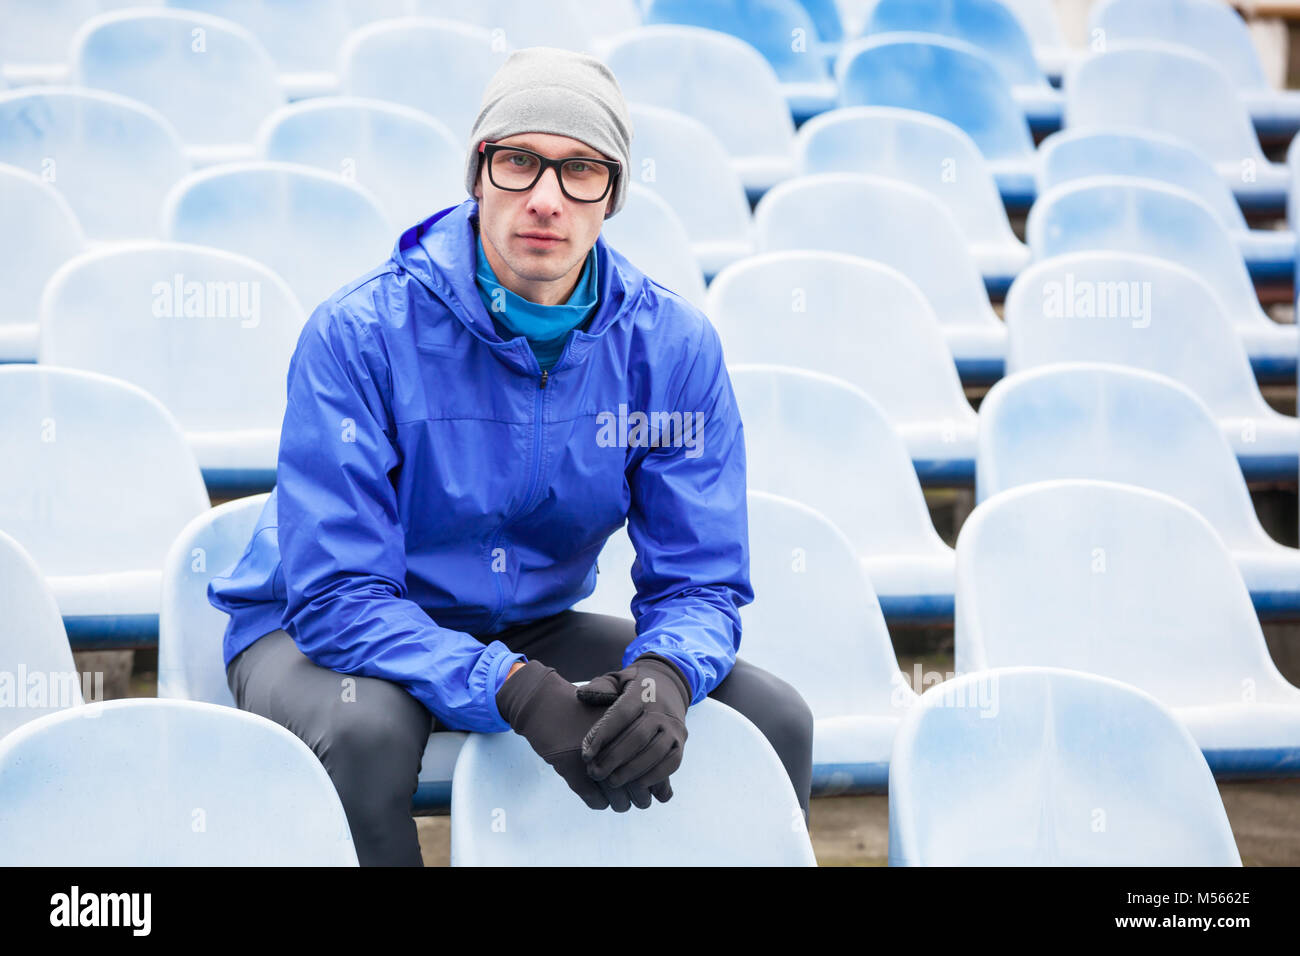 Portrait of professional athlete looking at camera sitting on stadium seat. Stock Photo